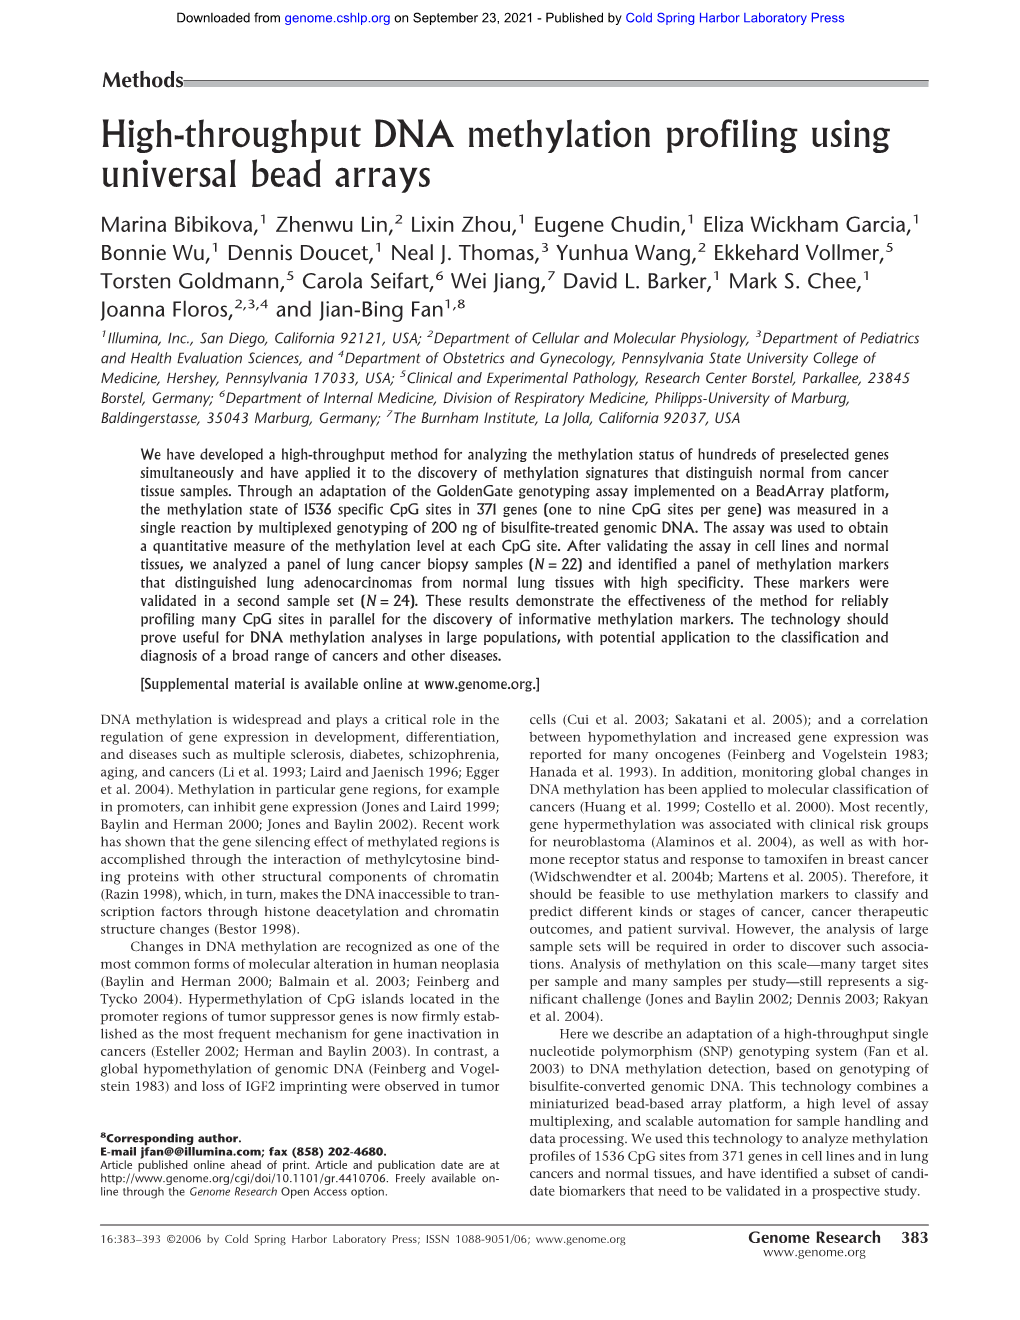 High-Throughput DNA Methylation Profiling Using Universal Bead Arrays